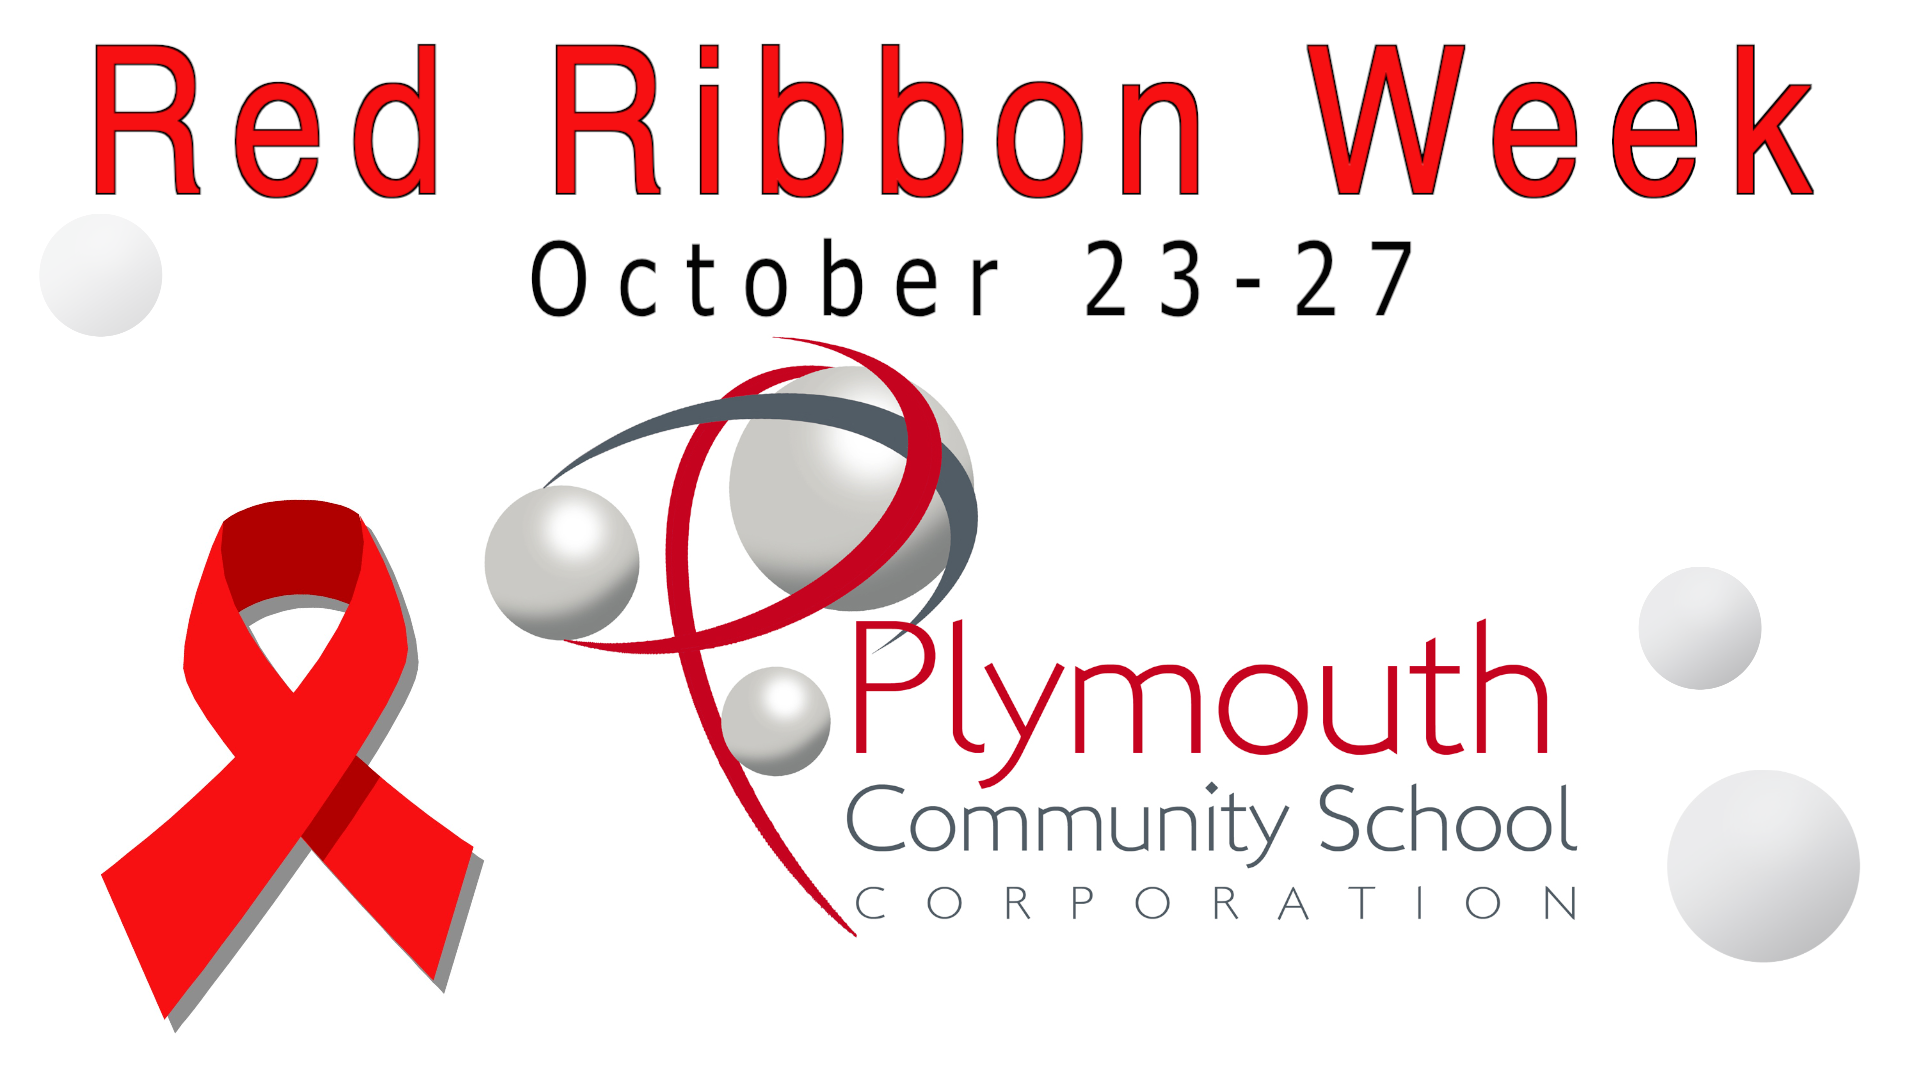 Red Ribbon Week October 23-27